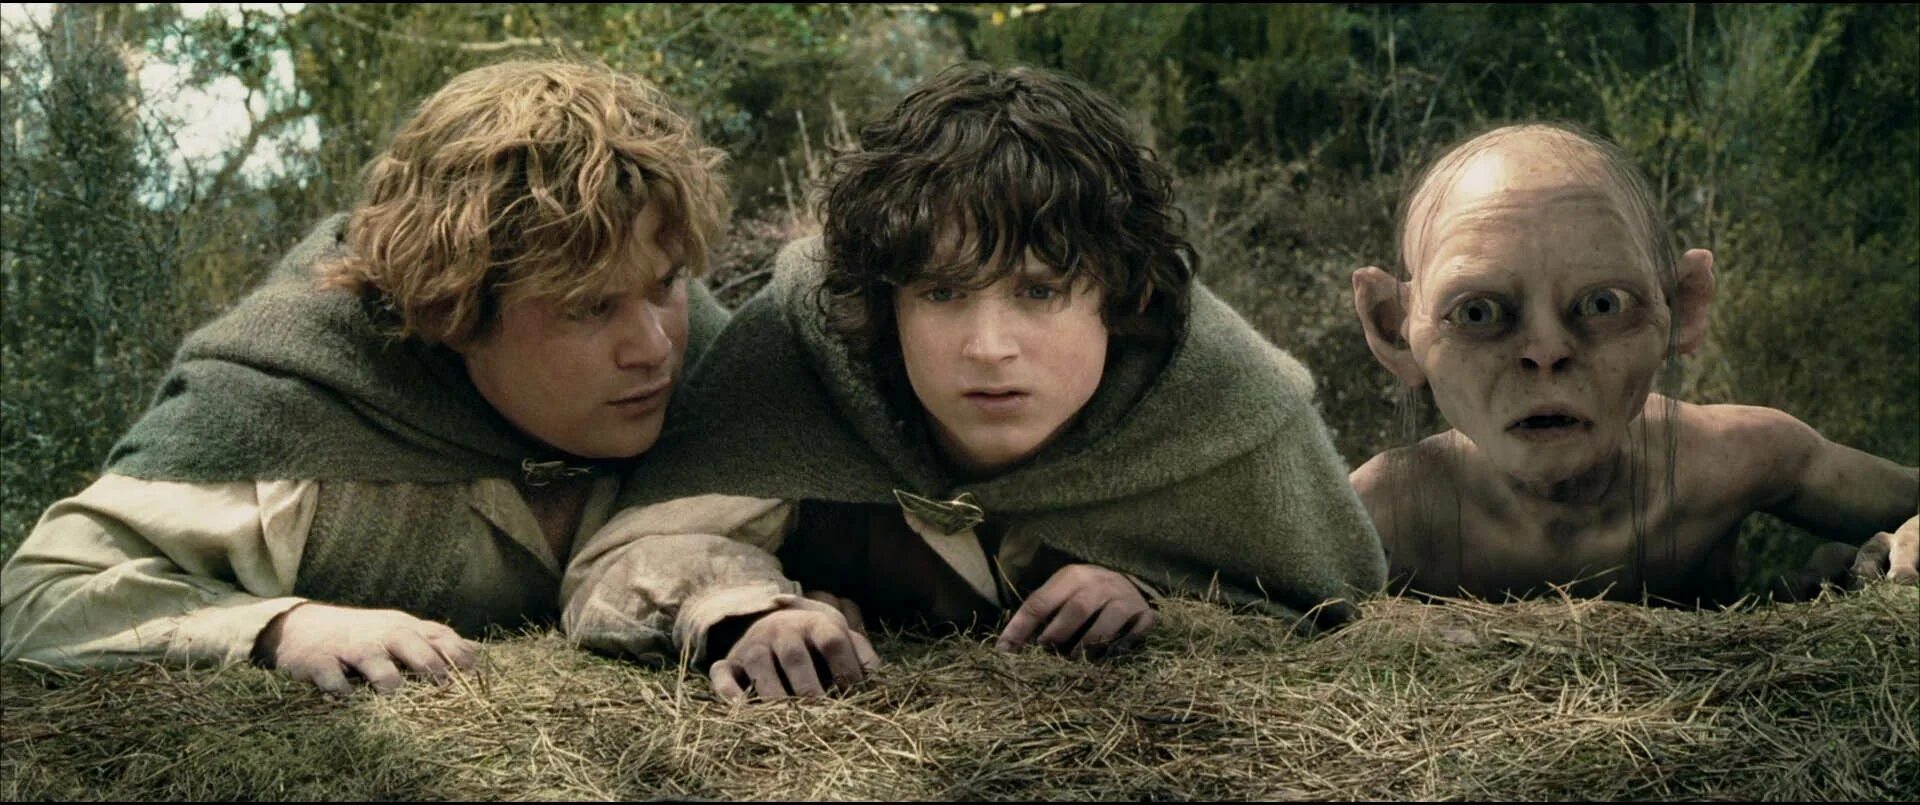 Властелин колец Гэндальф Фродо Сэм. Хоббит Фродо. Властелин колец Фродо и Сэм Кадр. Властелин колец моменты